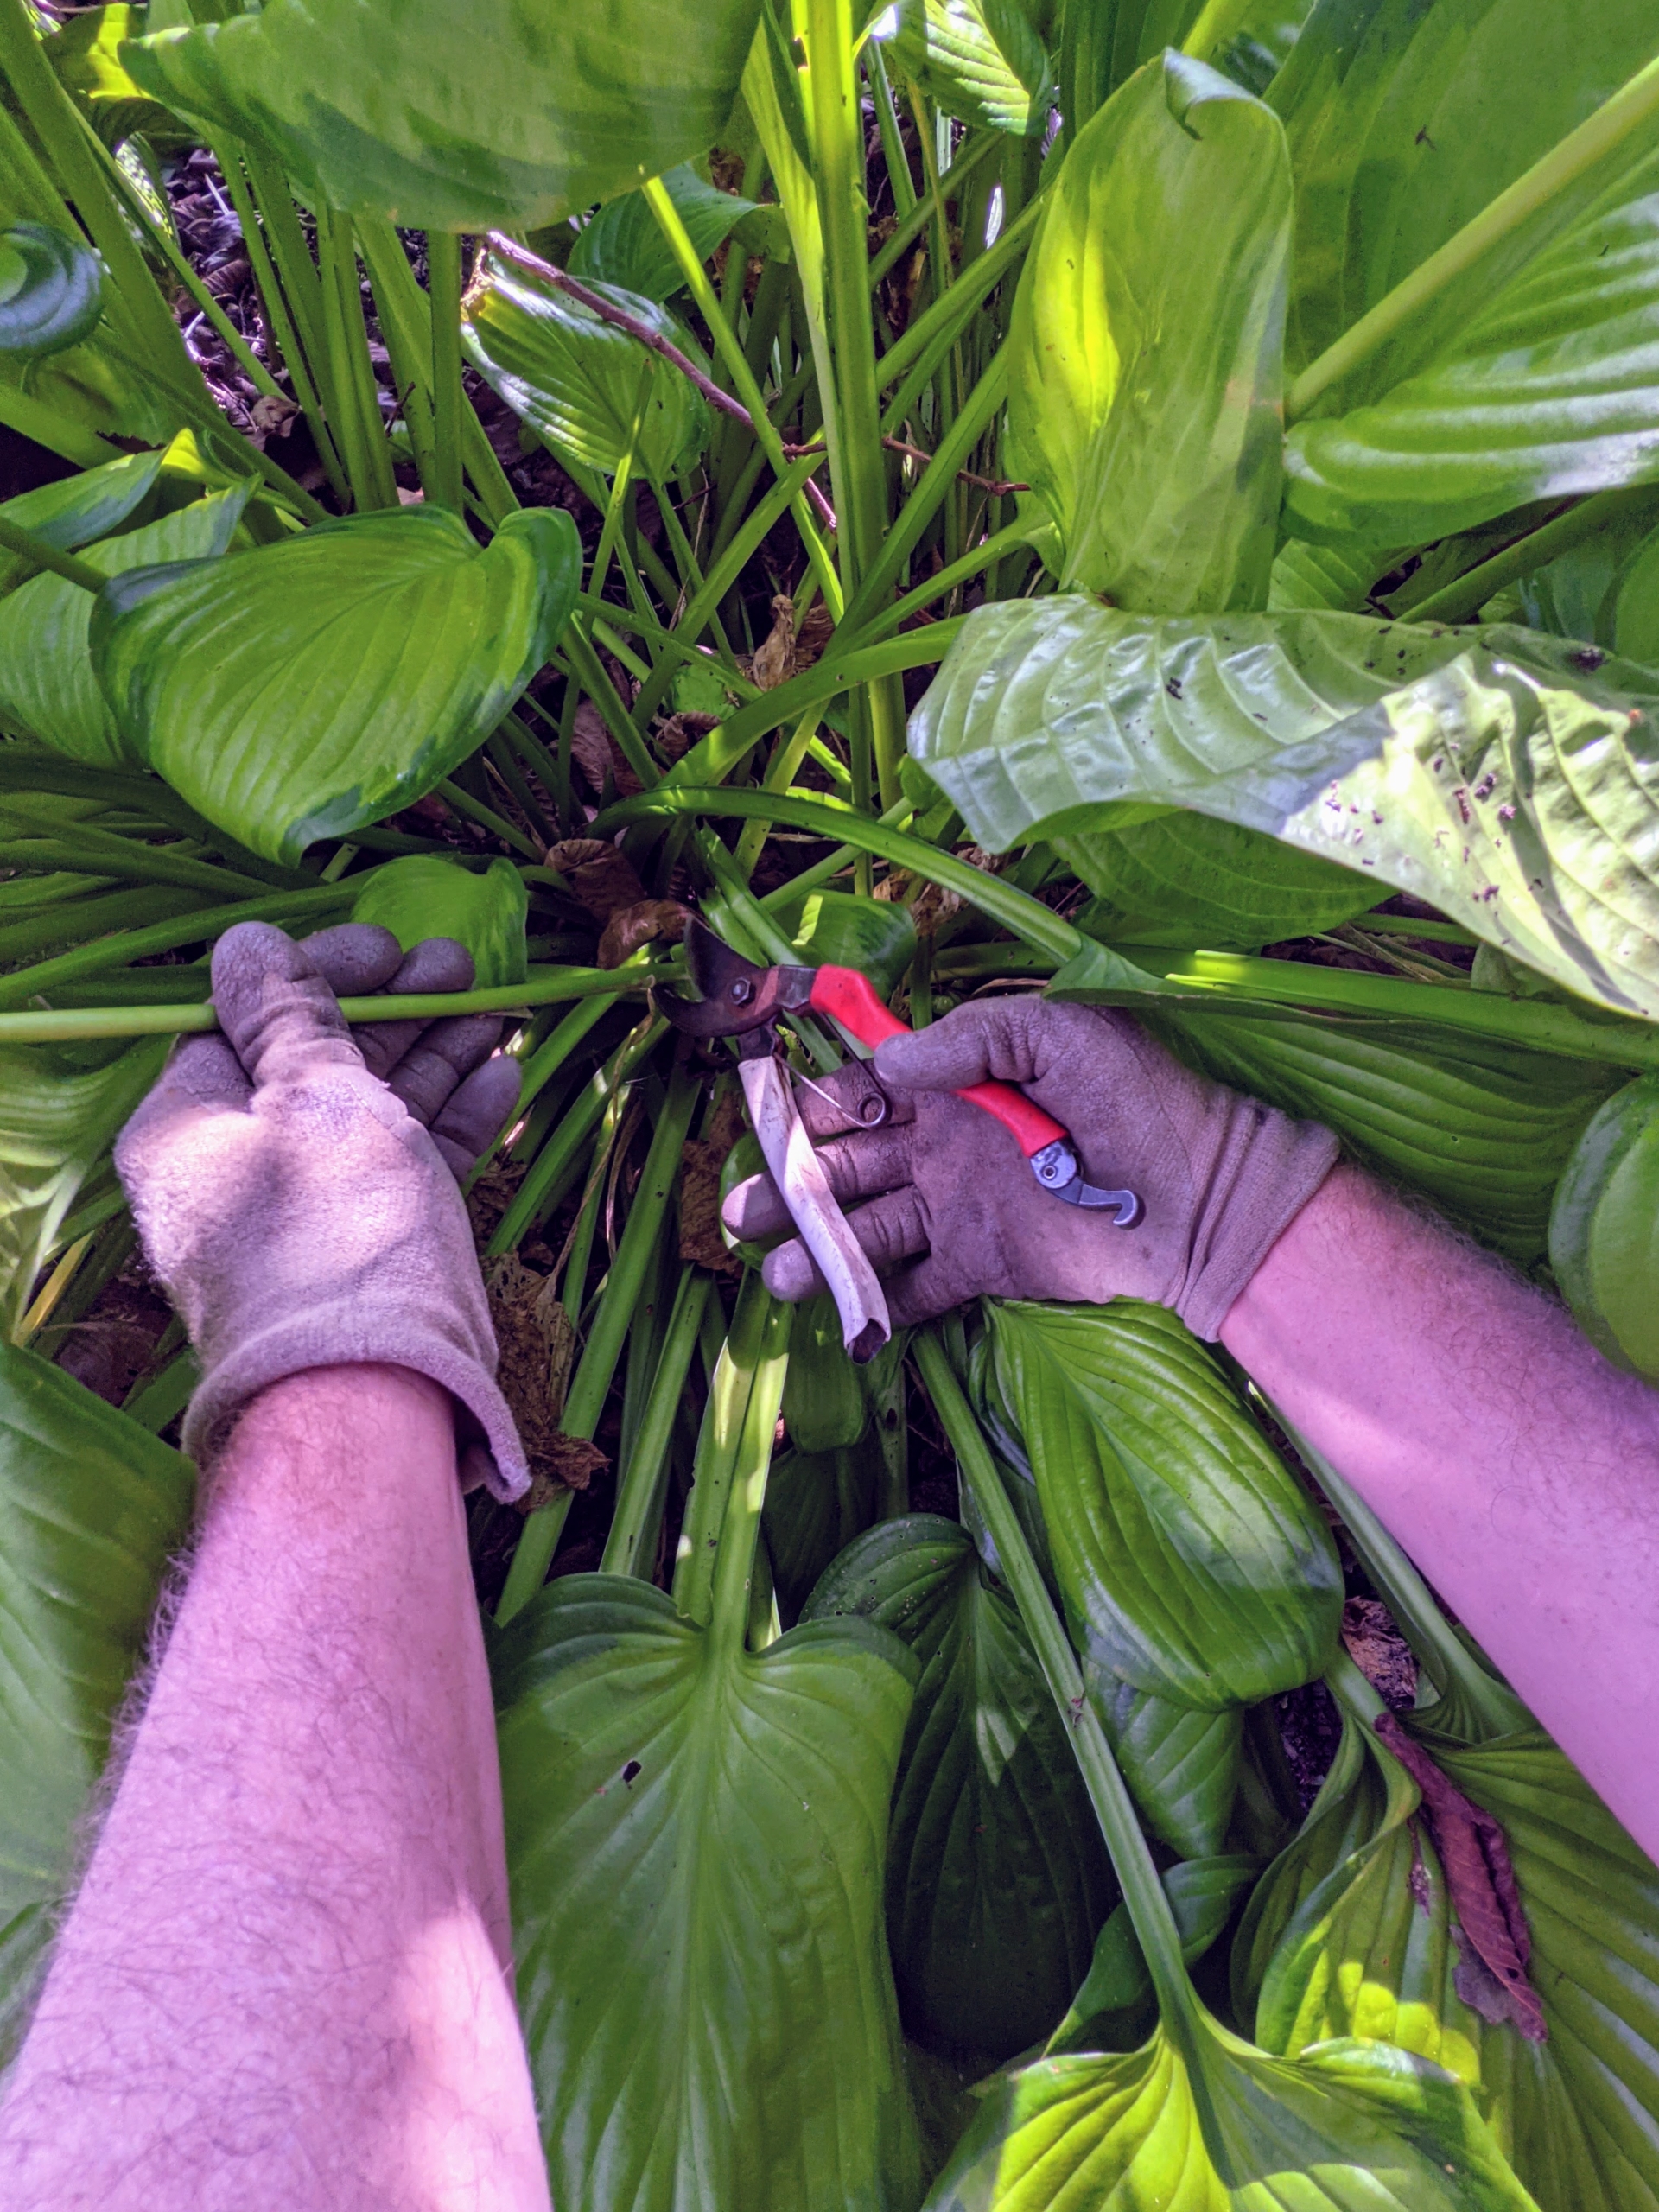 Maintaining Garden Tools - The Martha Stewart Blog